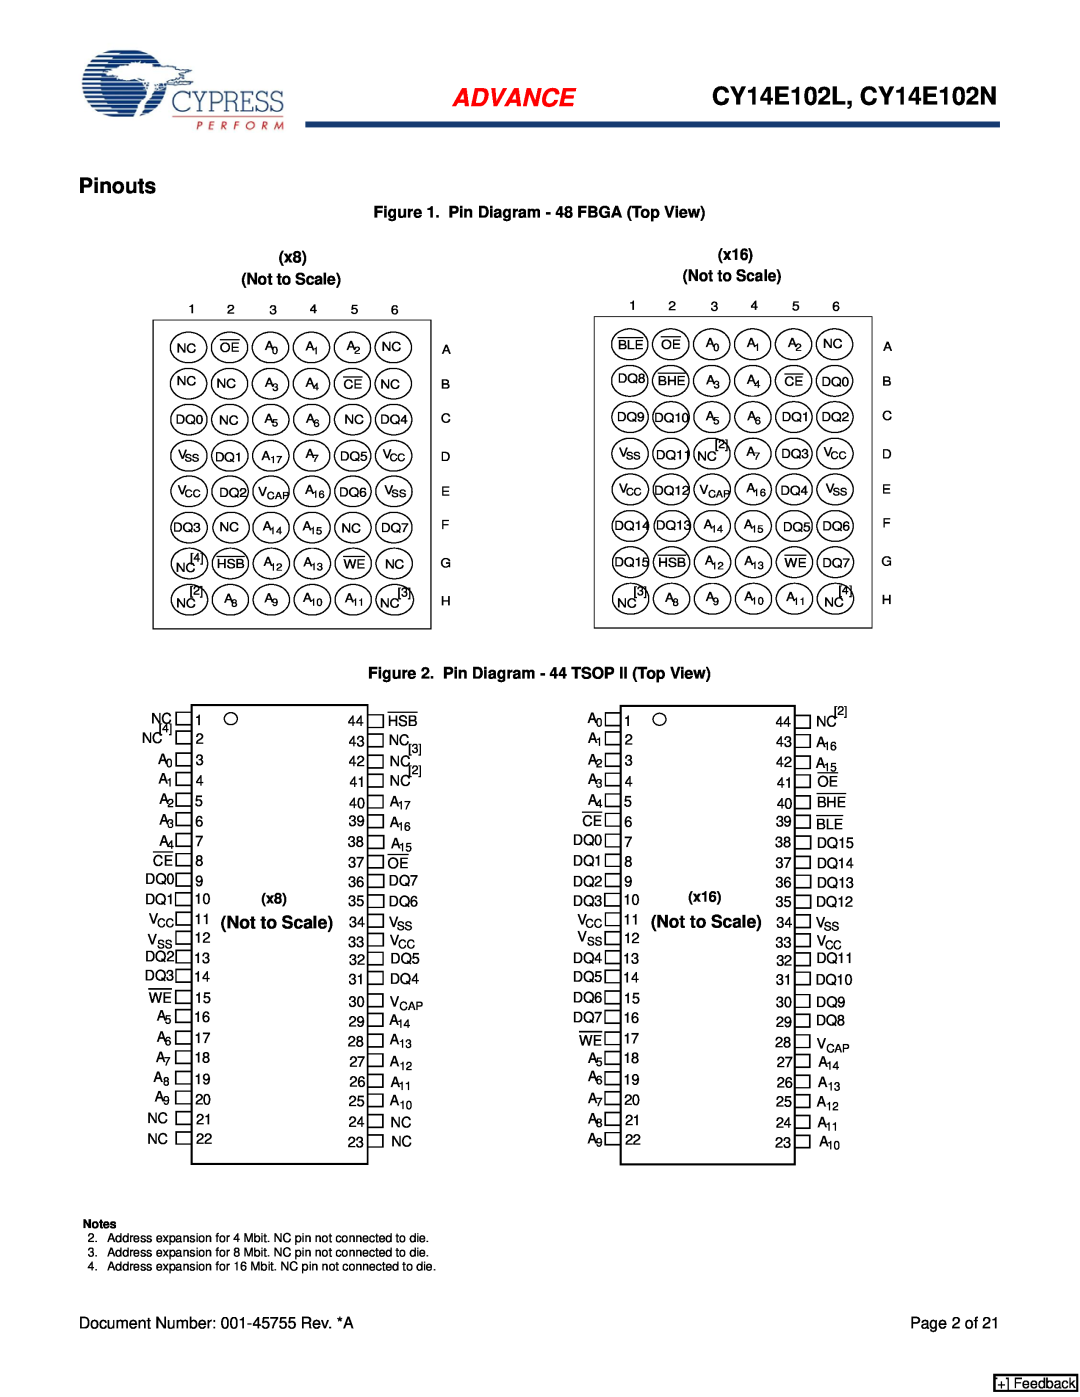 Cypress CY14E102L manual Pinouts, Not to Scale, Pin Diagram - 48 FBGA Top View, Pin Diagram - 44 TSOP II Top View, Advance 